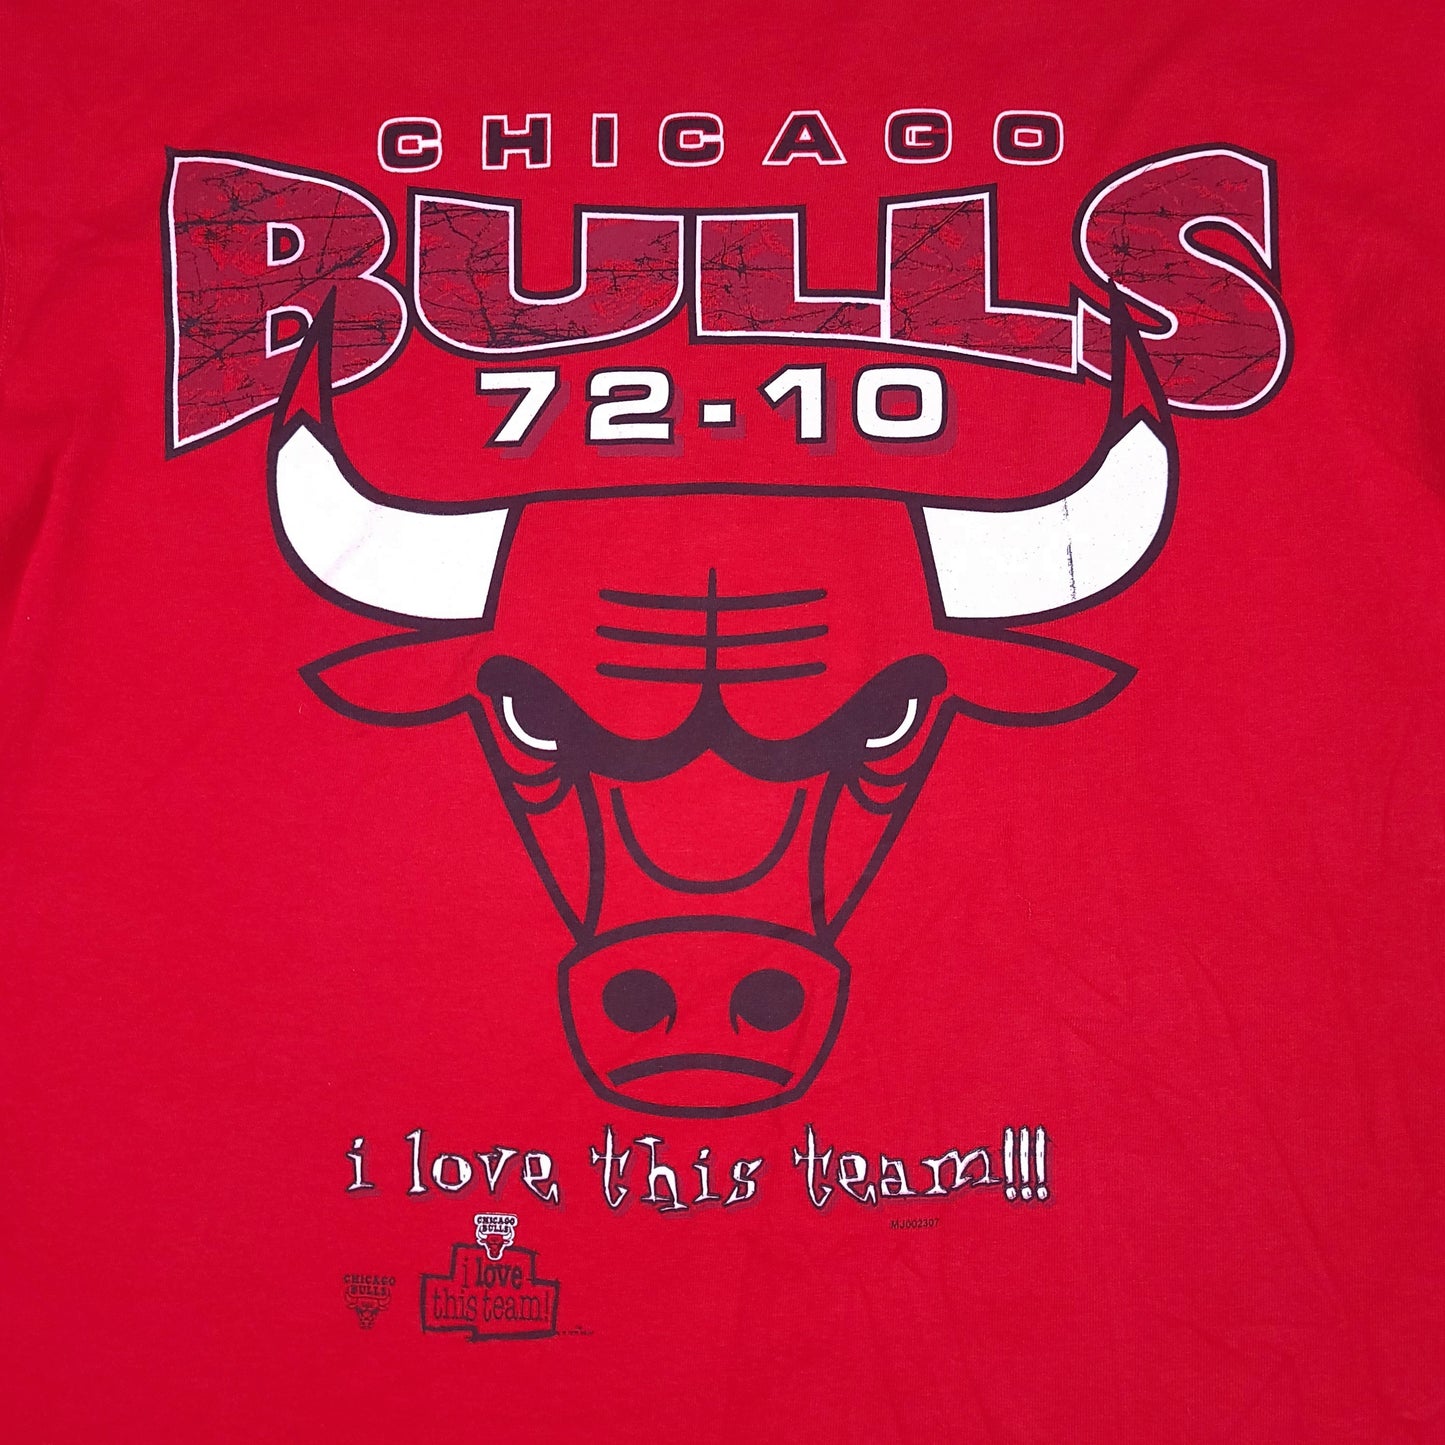 Vintage Chicago Bulls Red 72-10 Riddell Tee